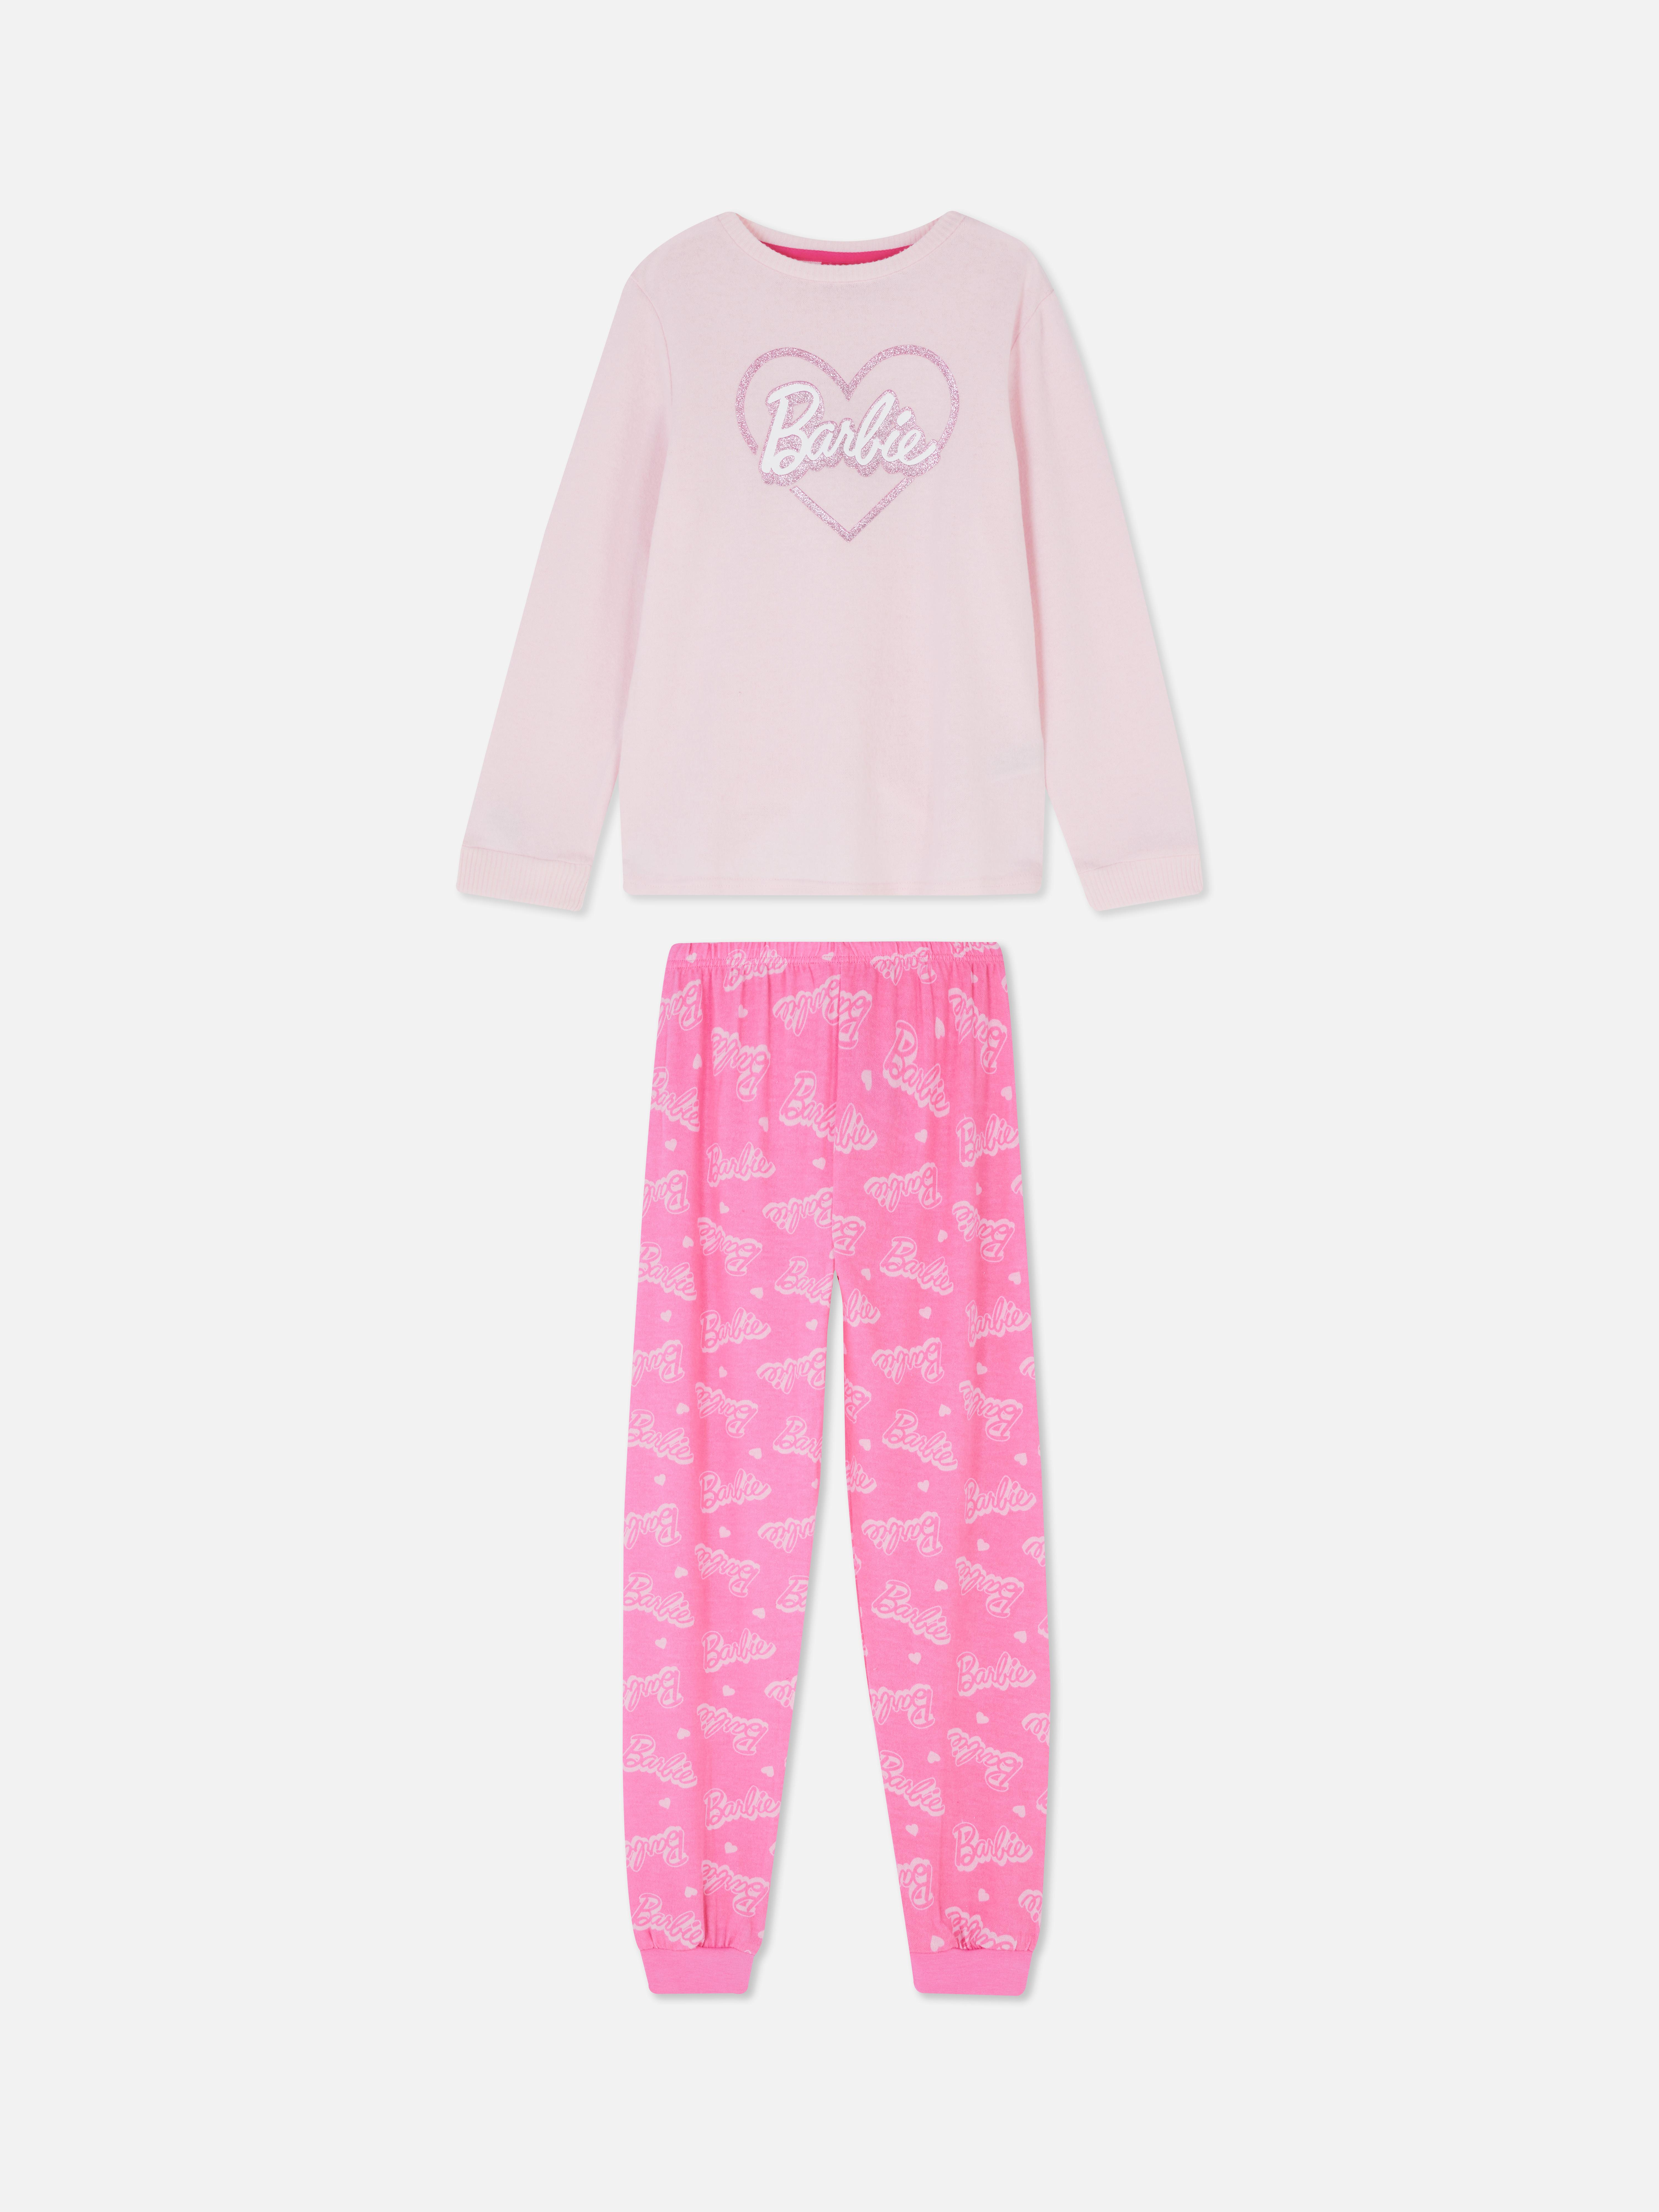 Barbie Printed Pyjama Set